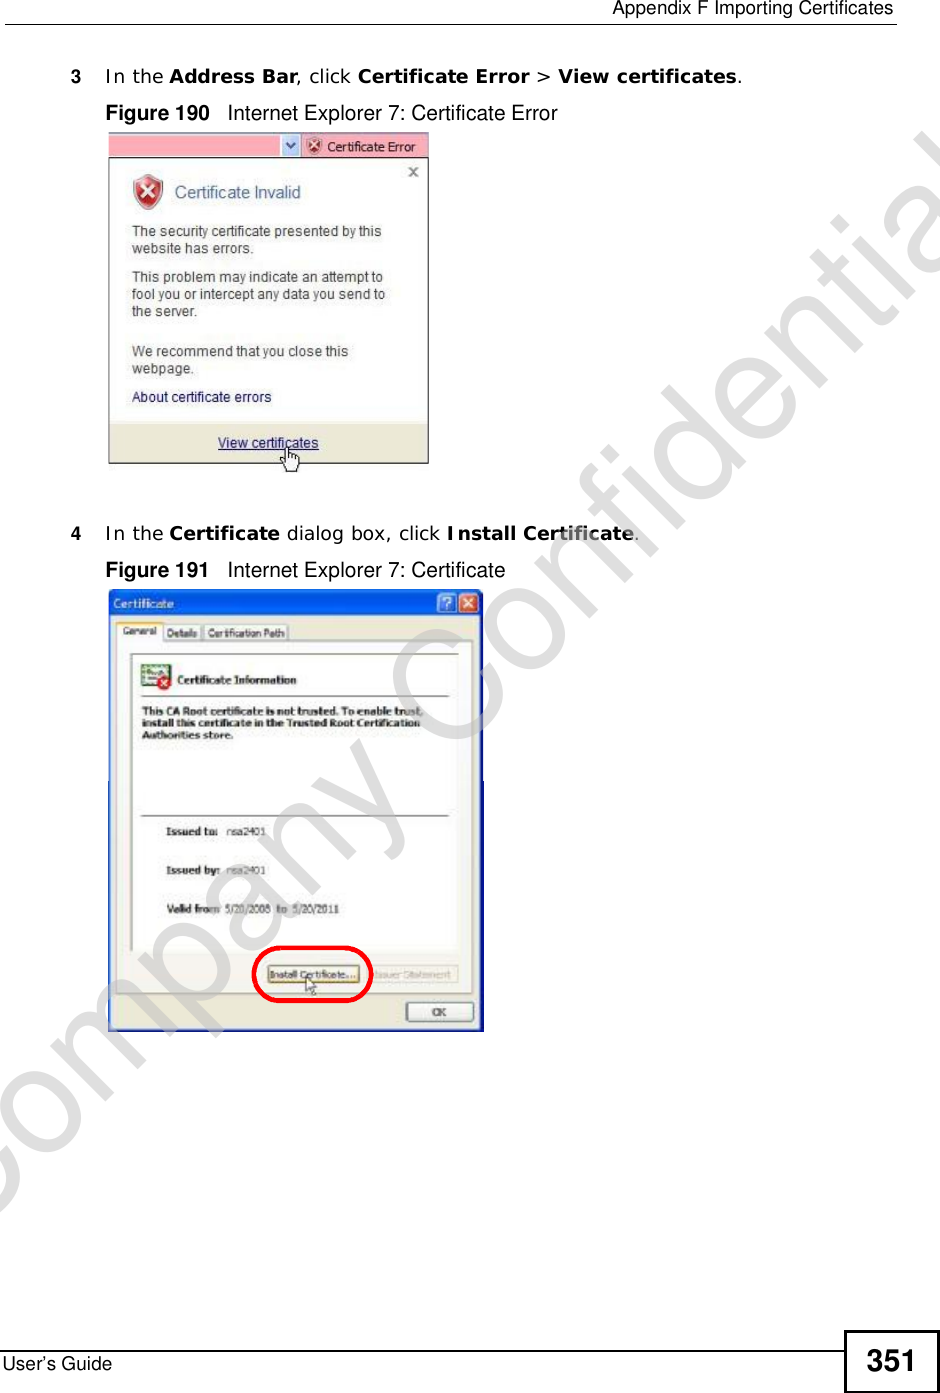  Appendix FImporting CertificatesUser’s Guide 3513In the Address Bar, click Certificate Error &gt; View certificates.Figure 190   Internet Explorer 7: Certificate Error4In the Certificate dialog box, click Install Certificate.Figure 191   Internet Explorer 7: CertificateCompany Confidential